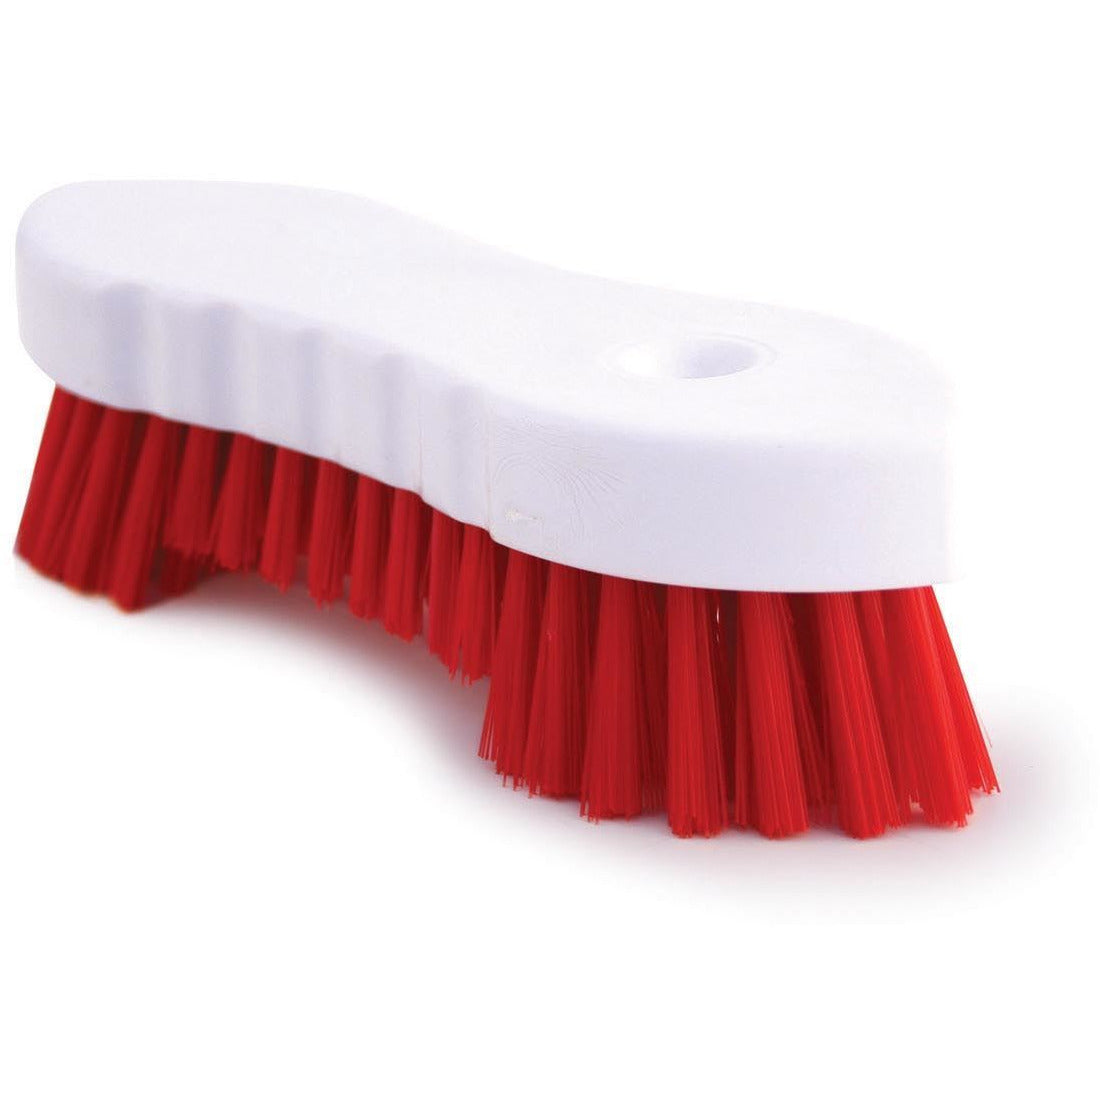 Red Scrubbing Brush Food Hygiene Stiff Double Winged Floor Scrub Hand Deck Brush - The Dustpan and Brush Store